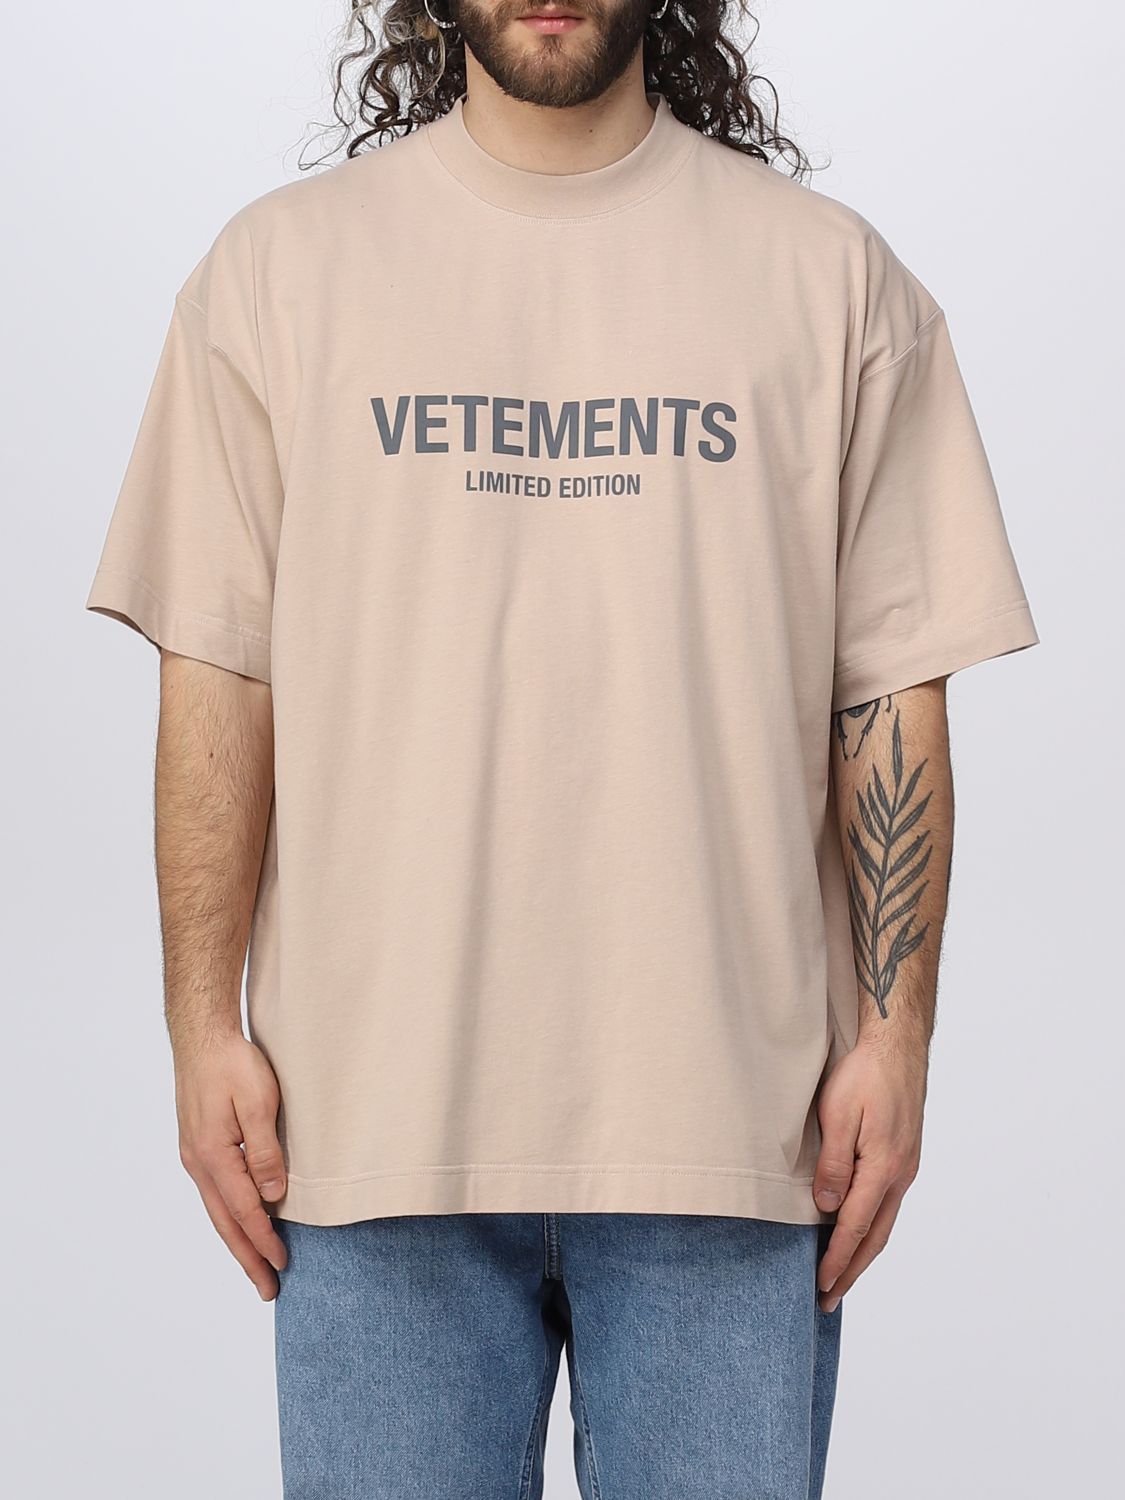 VTMNTS VETEMENTS L/S Tシャツ ロンT-